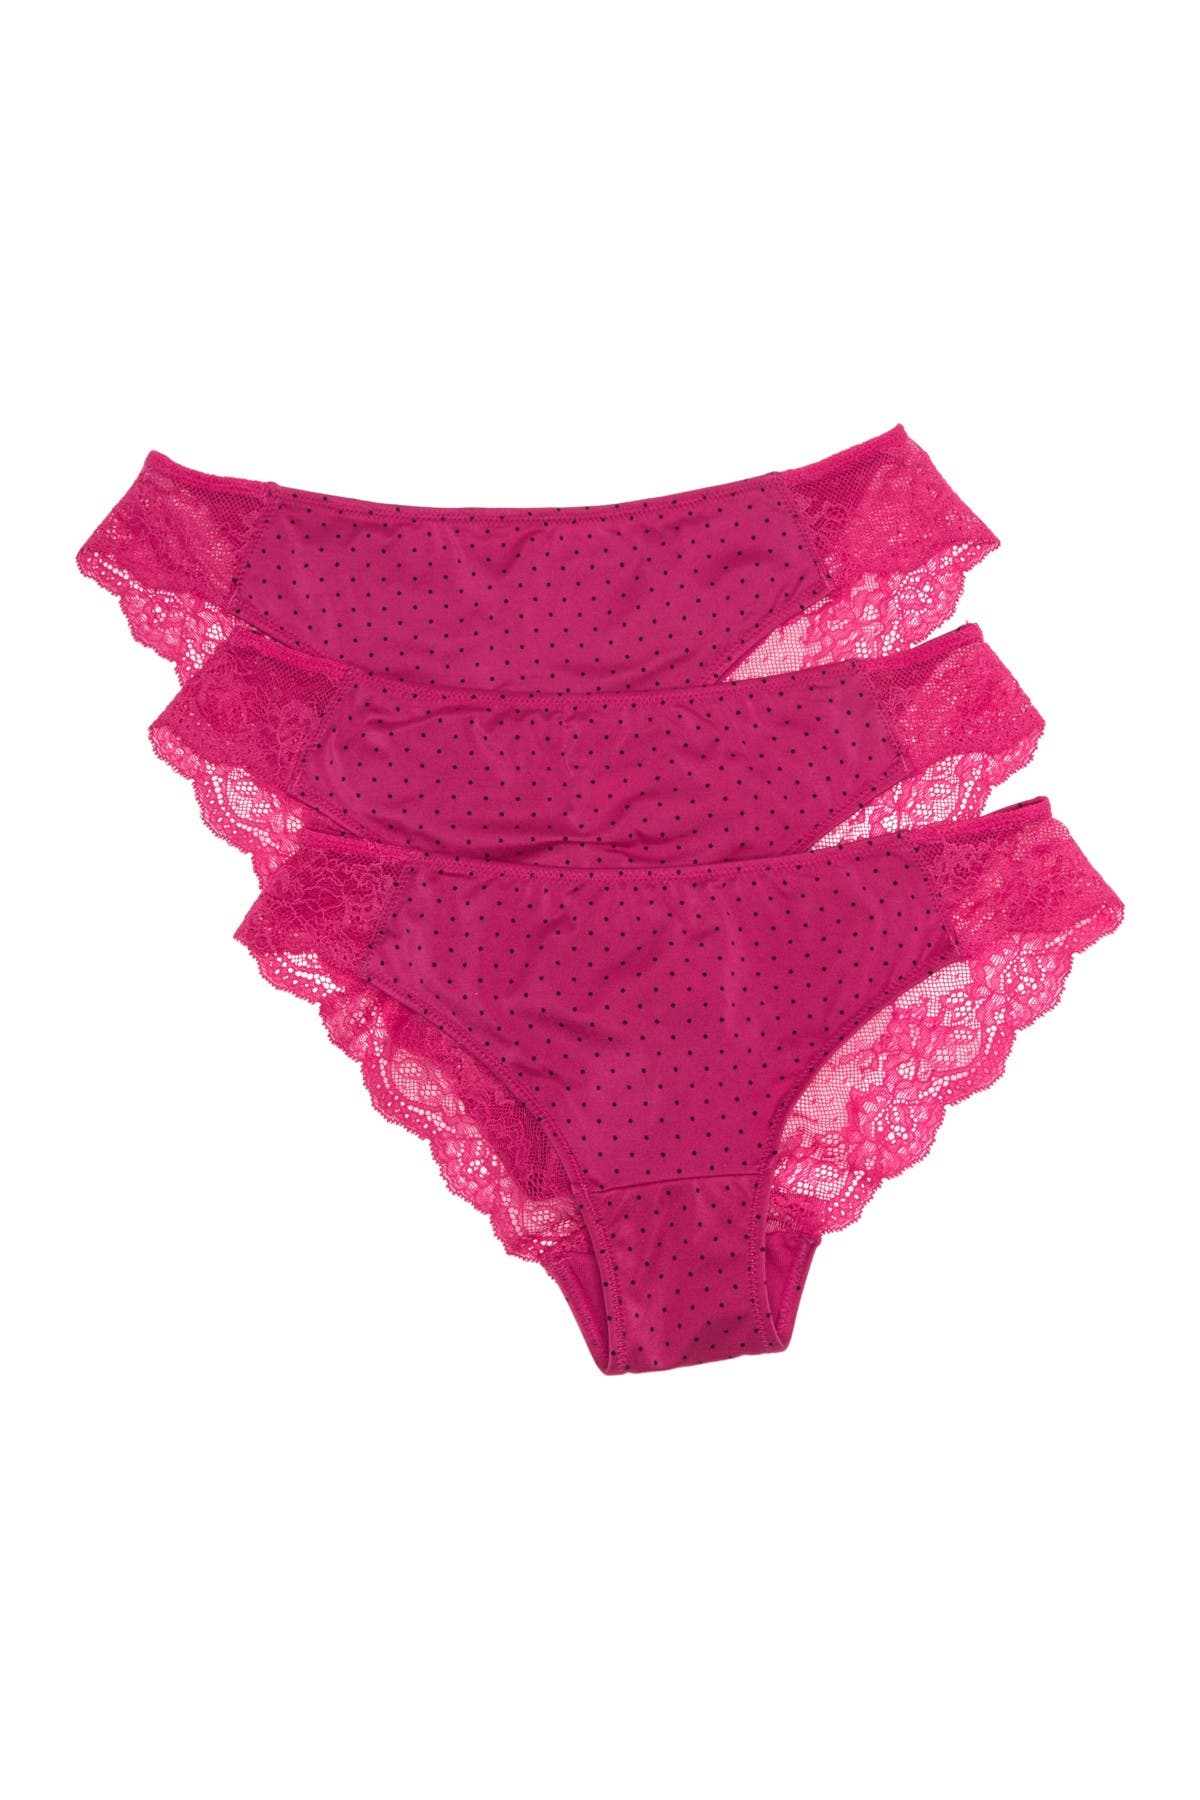 Maidenform Comfort Devotion Lace Back Tanga Underwear 40159 In